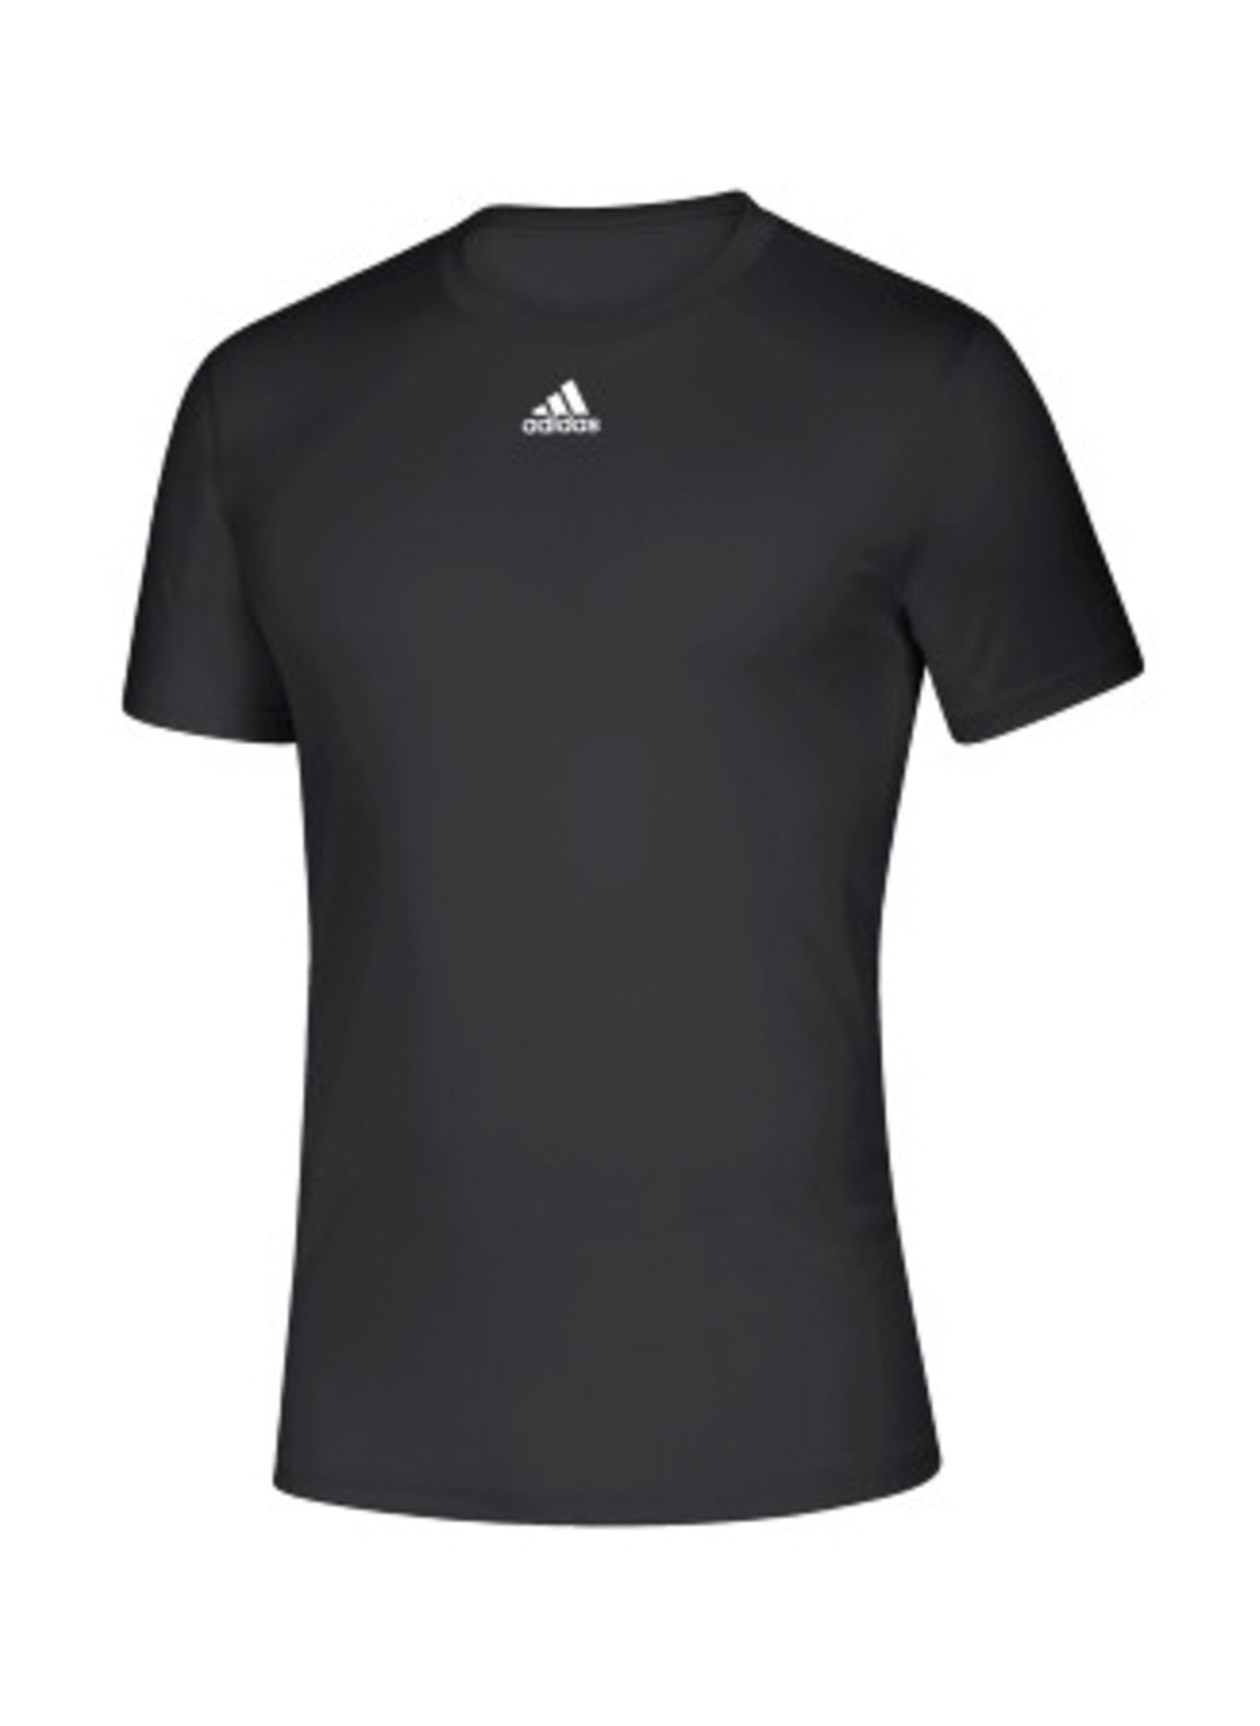 Adidas Men's Short-Sleeve T-Shirt | Adidas Custom Made T-Shirts